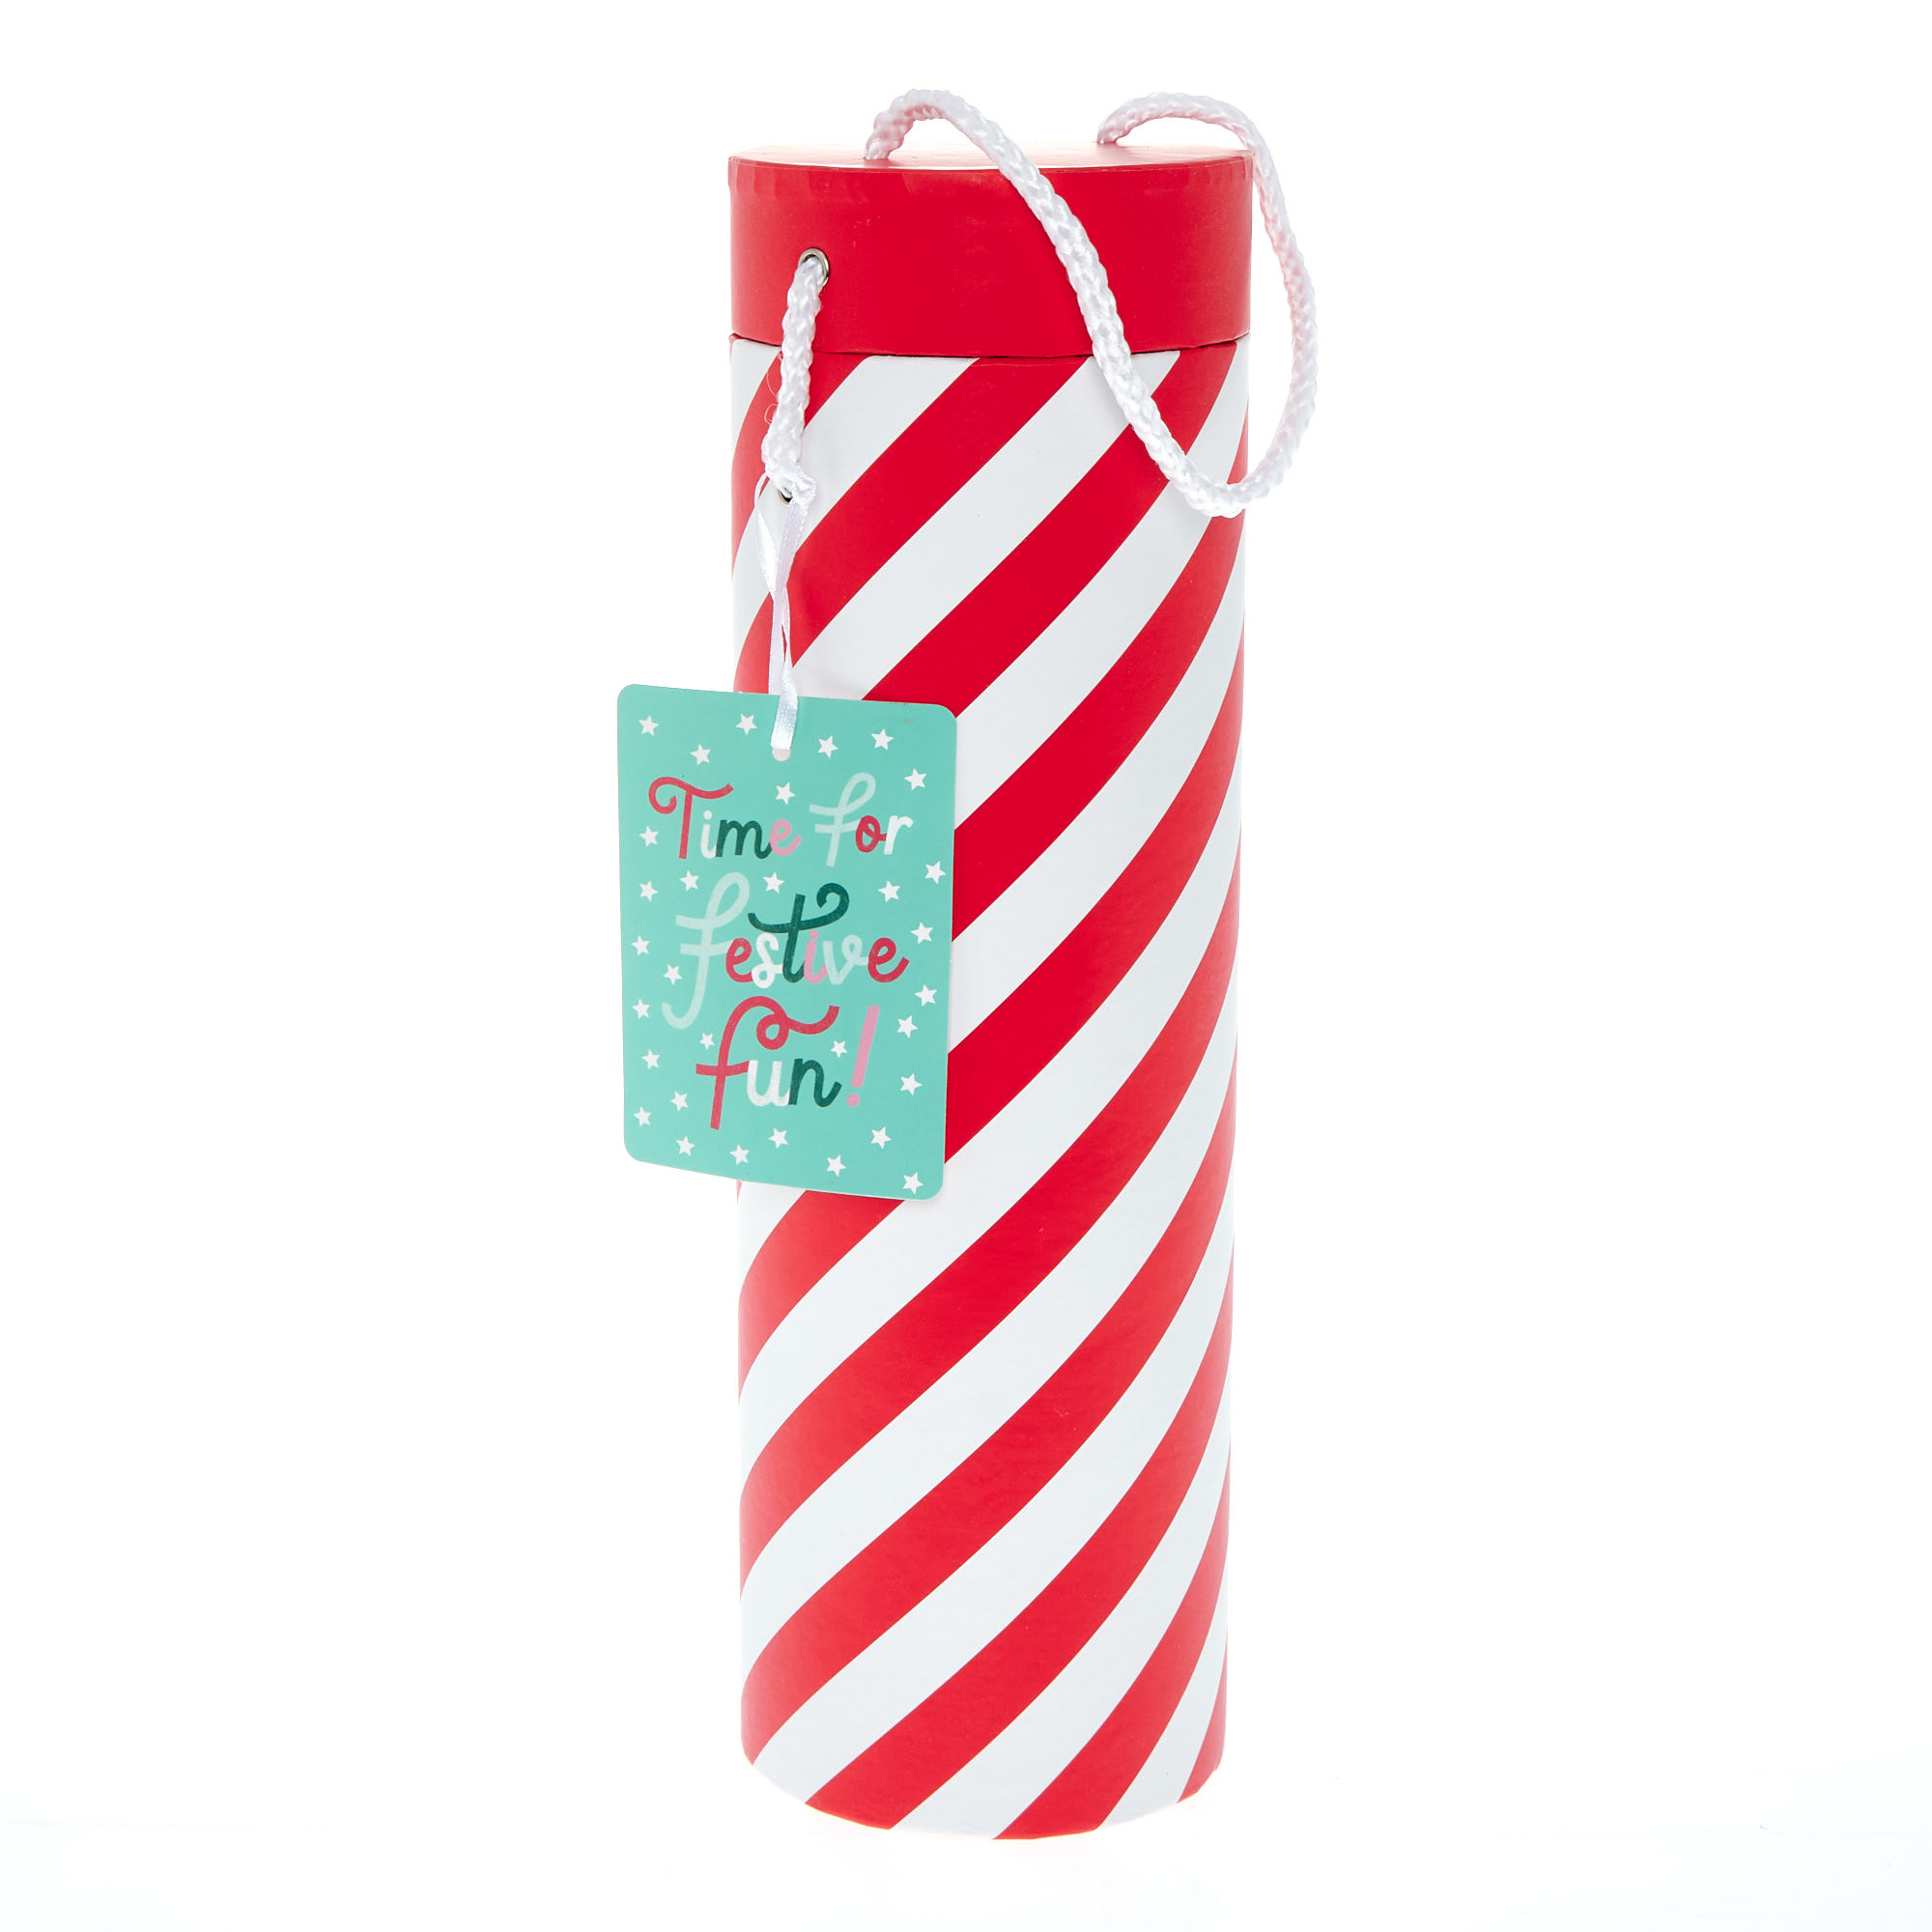 Candy Stripes Festive Fun Bottle Gift Boxes - Set of 2